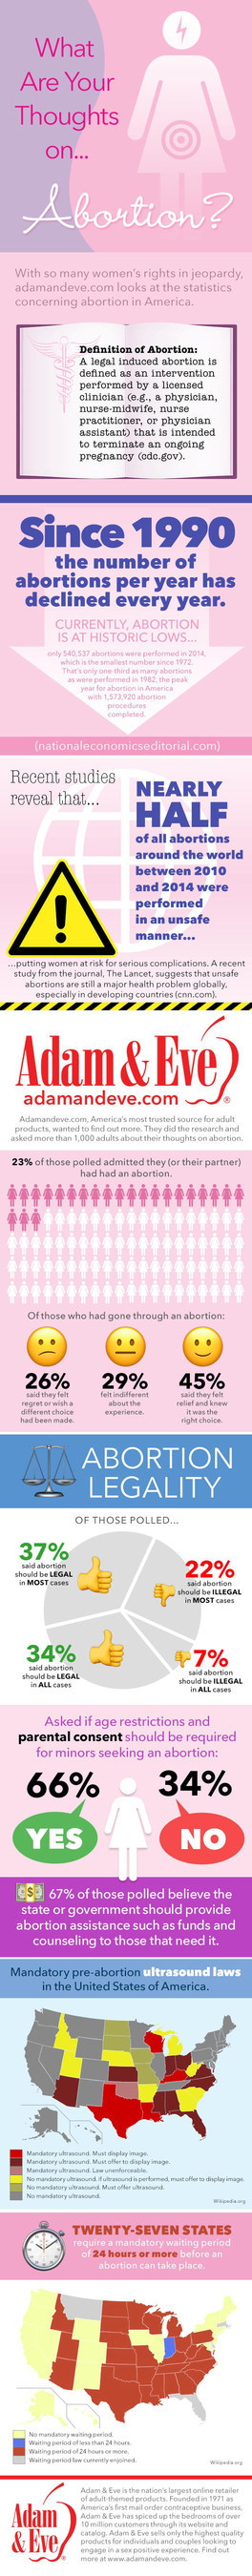 Adamandeve.com Reveals Statistics On Abortion In U.S.